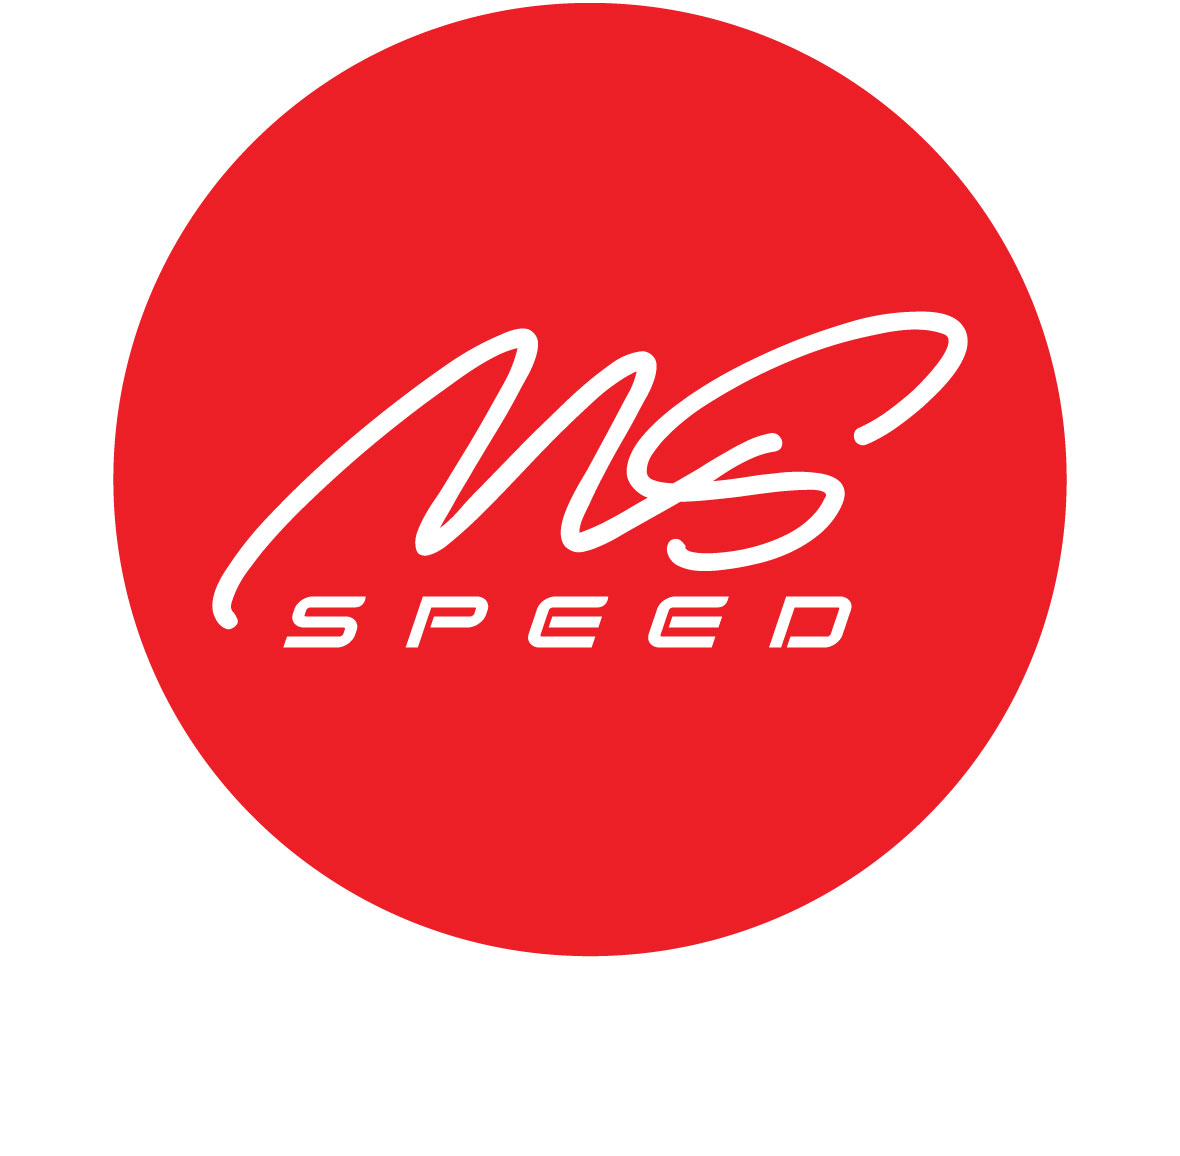 Branding_MS_Speed_Large